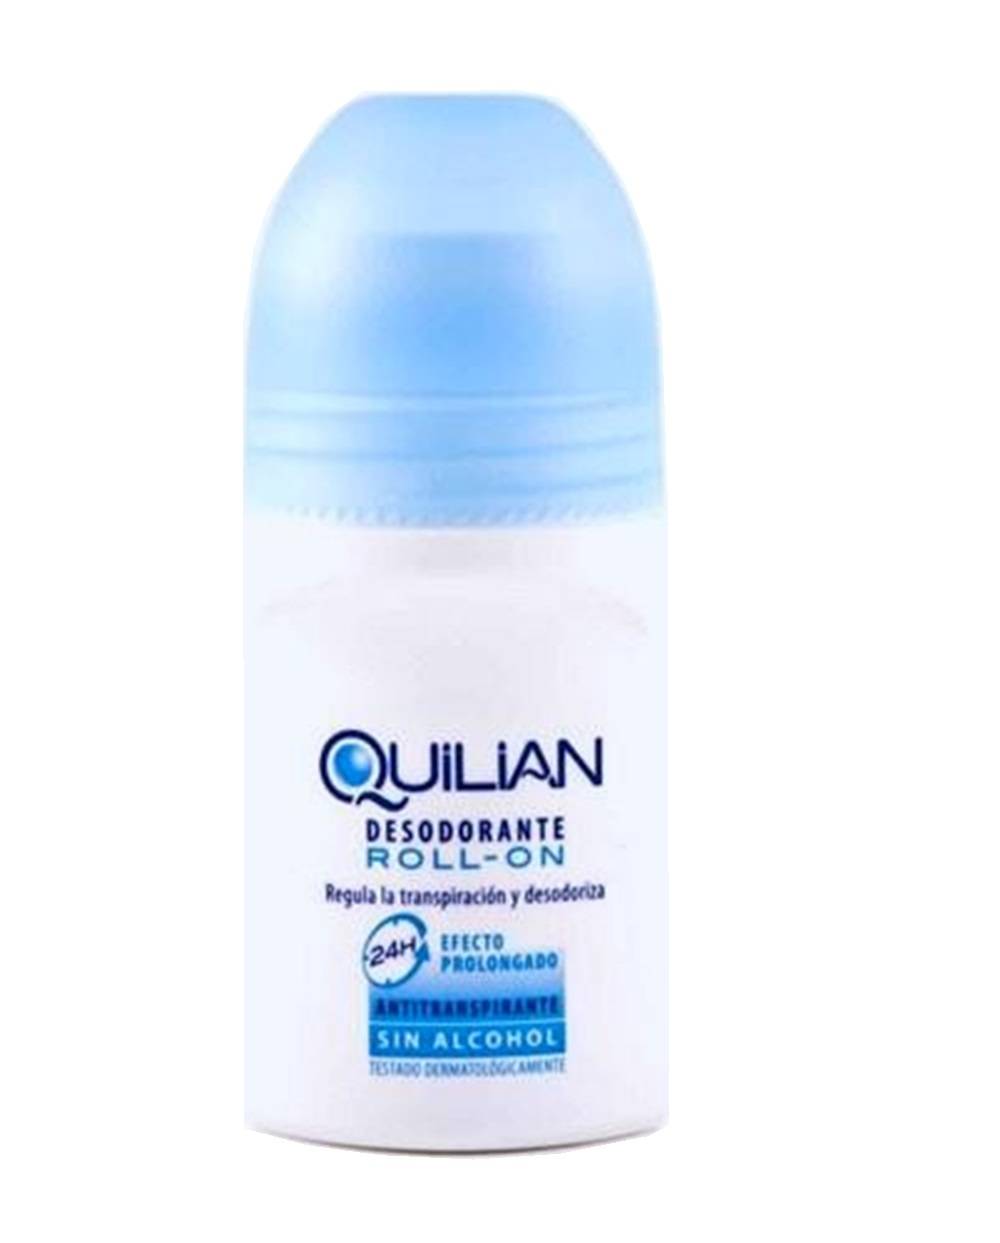 Quillian desodorante Roll-on - Viñas